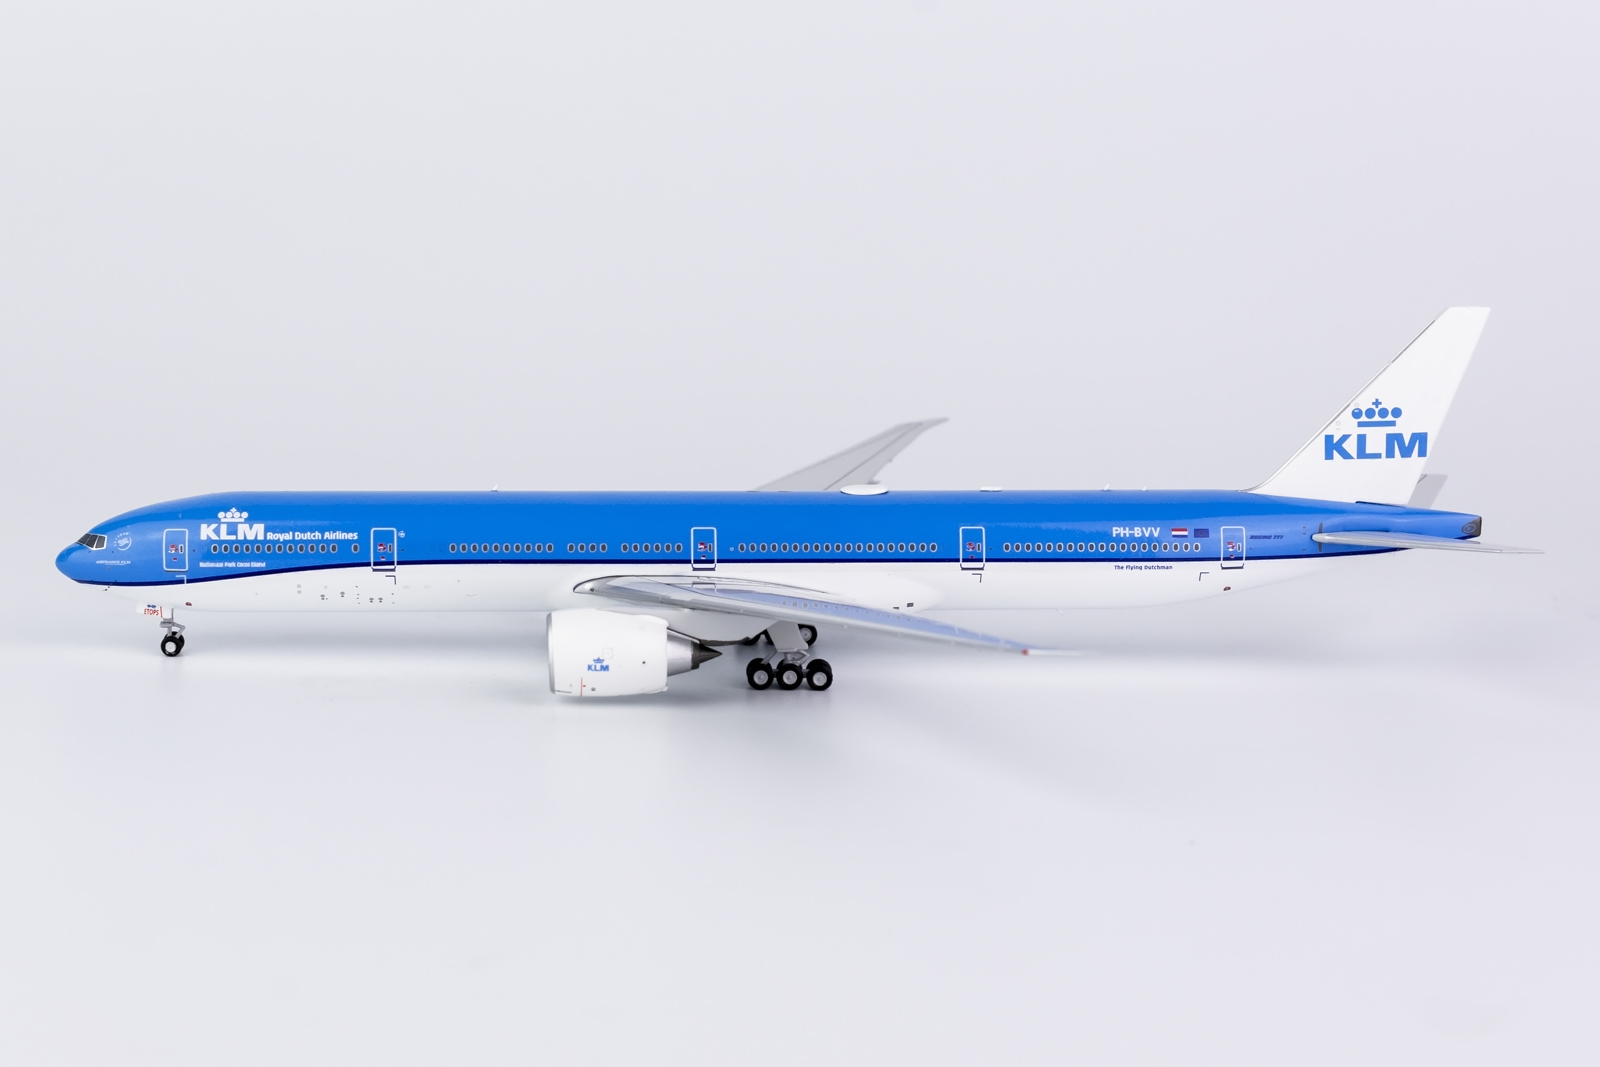 Modèle davion Echelle: 1: 200 Boeing 777-300ER  New Livery 2015 KLM 